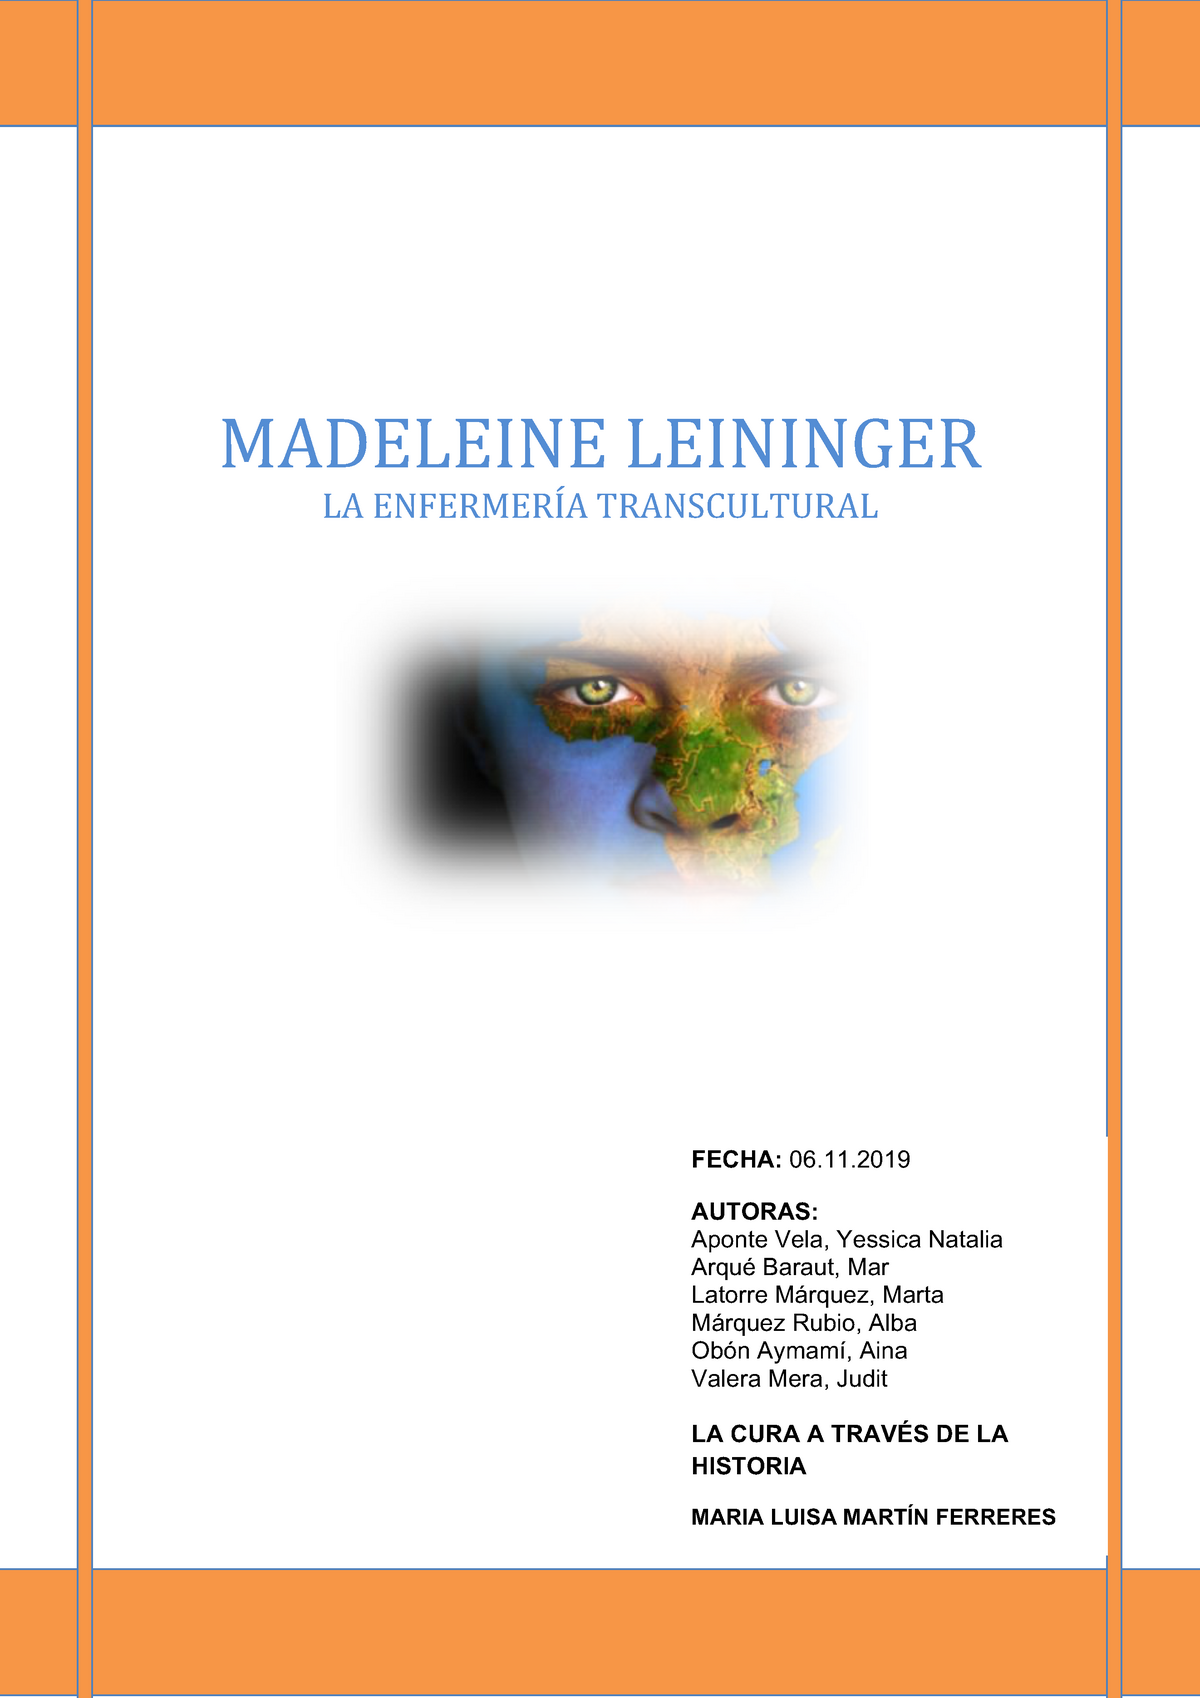 Madeleine Leininger trabajo - Warning: TT: undefined function: 32 Warning:  TT: undefined function: - Studocu